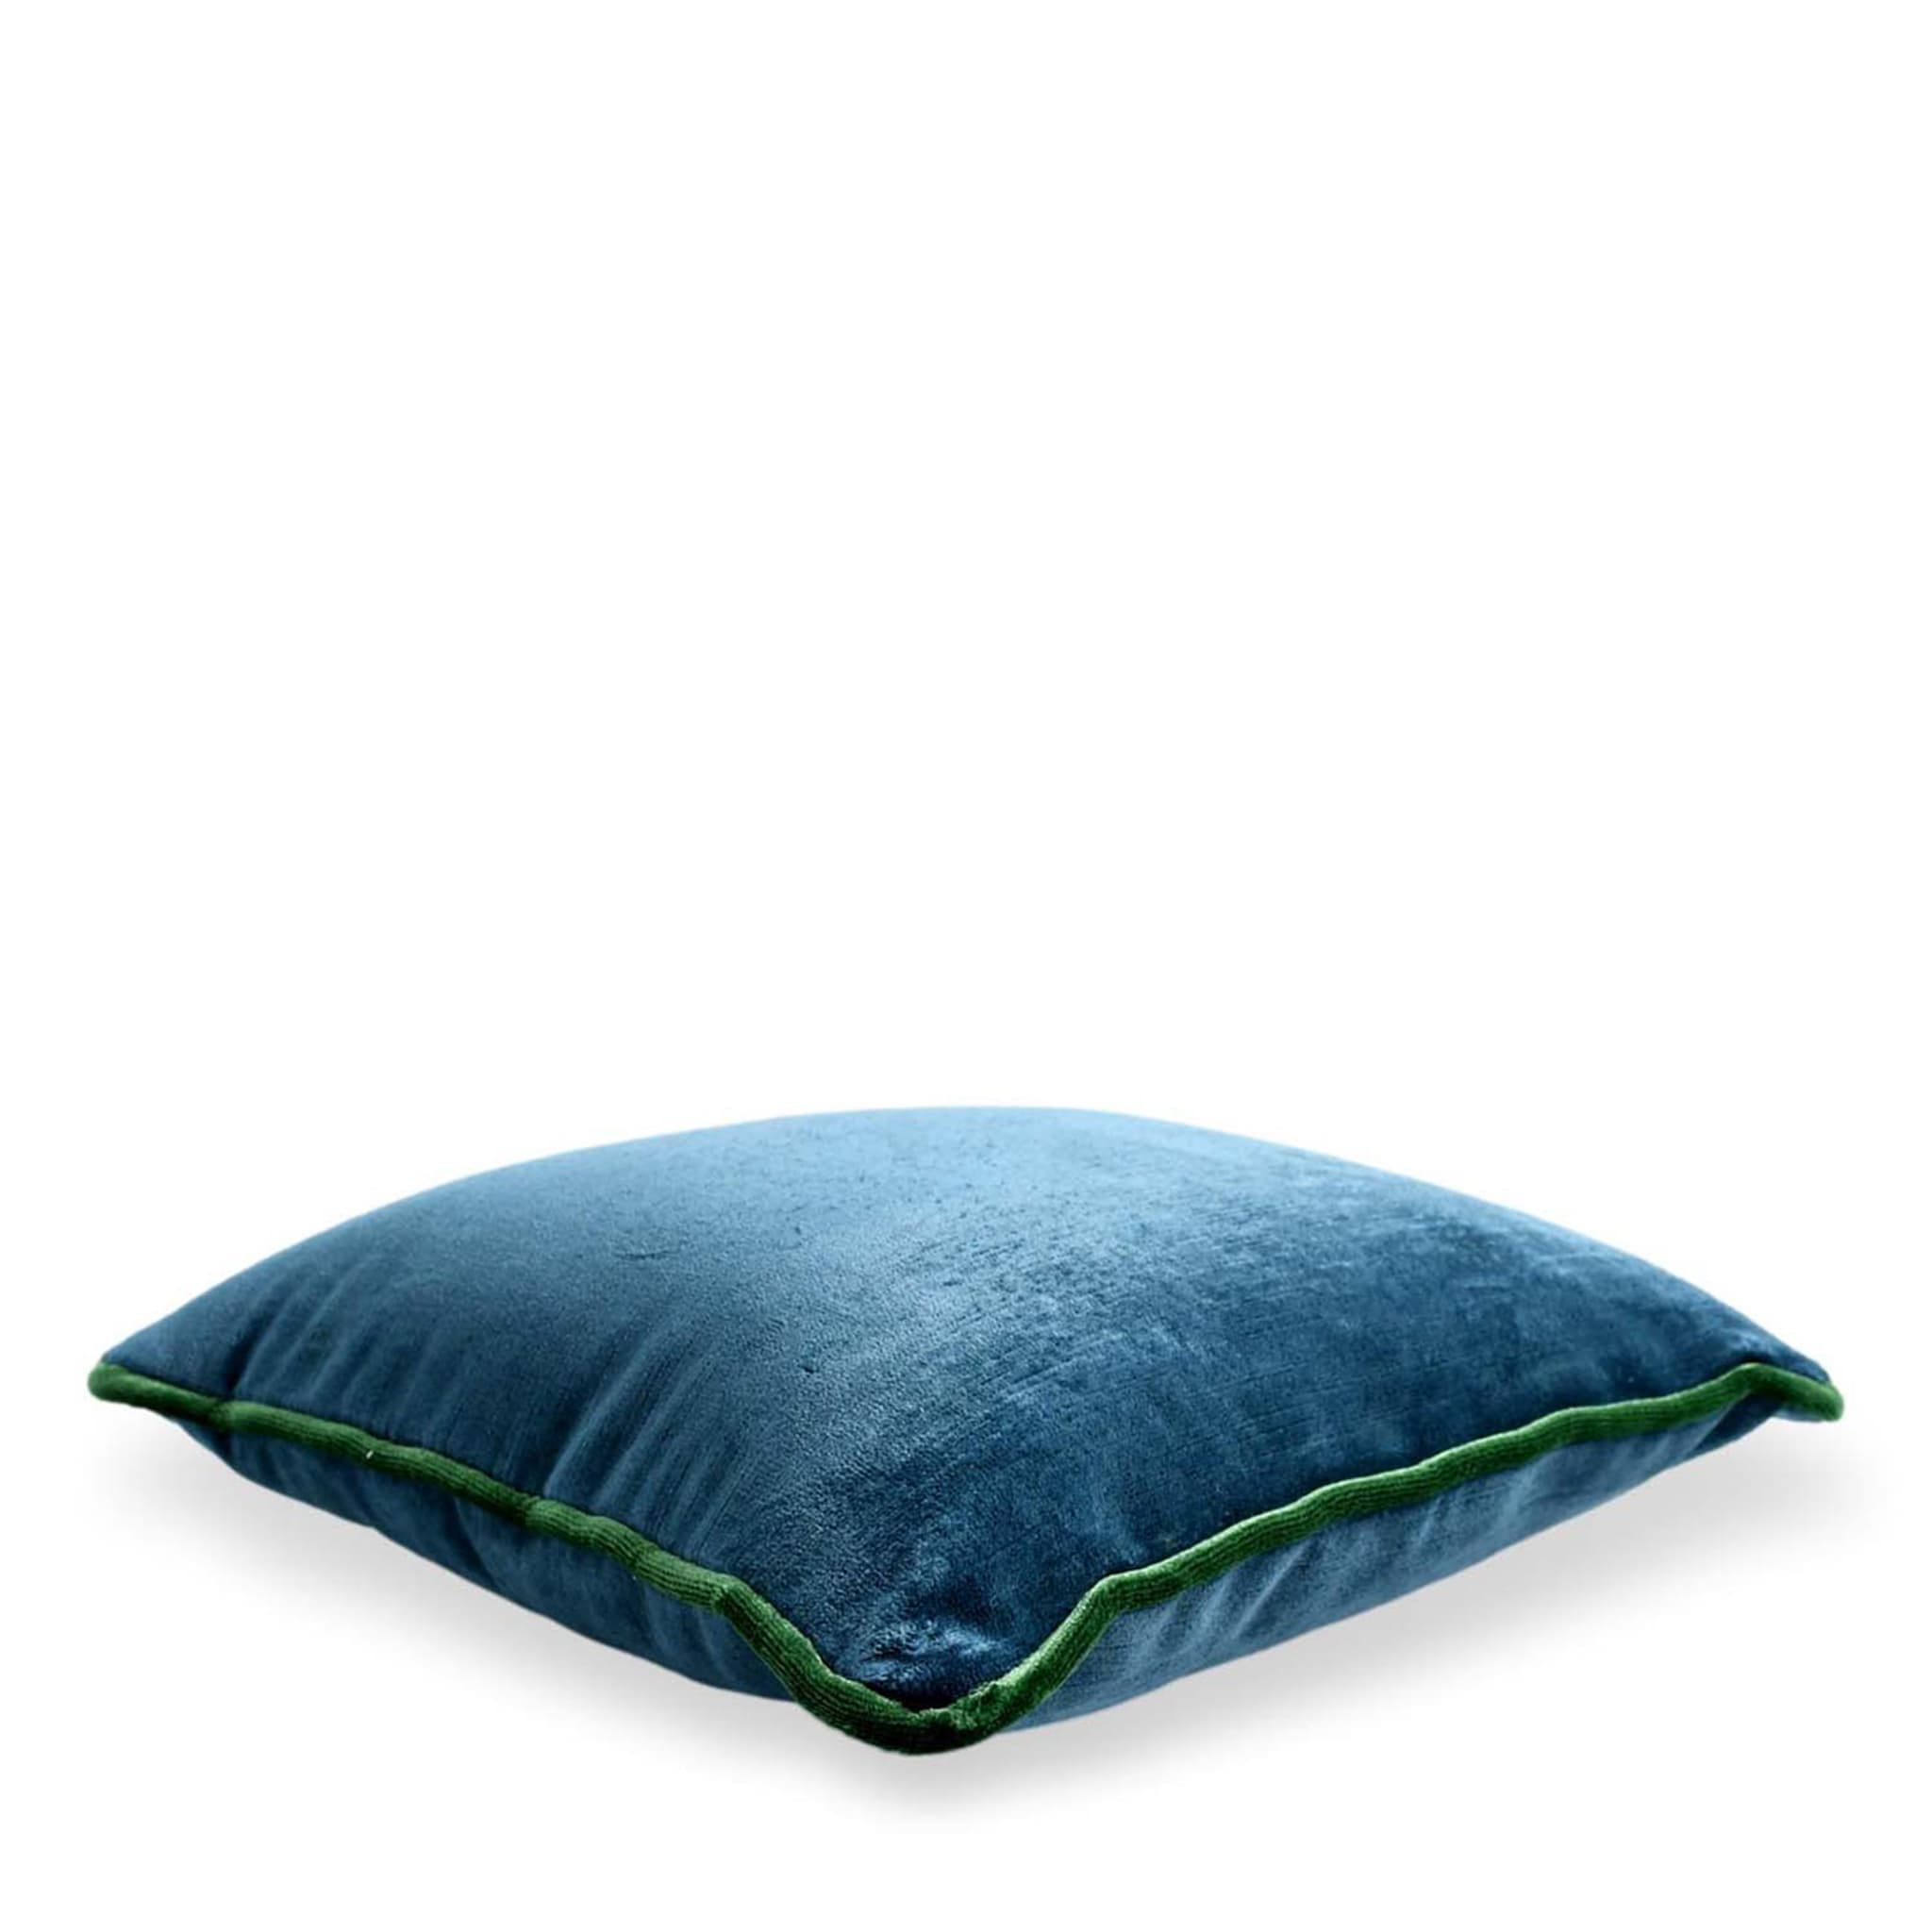 Blue Square Carrè Cushion in linen and silk velvet - Alternative view 1